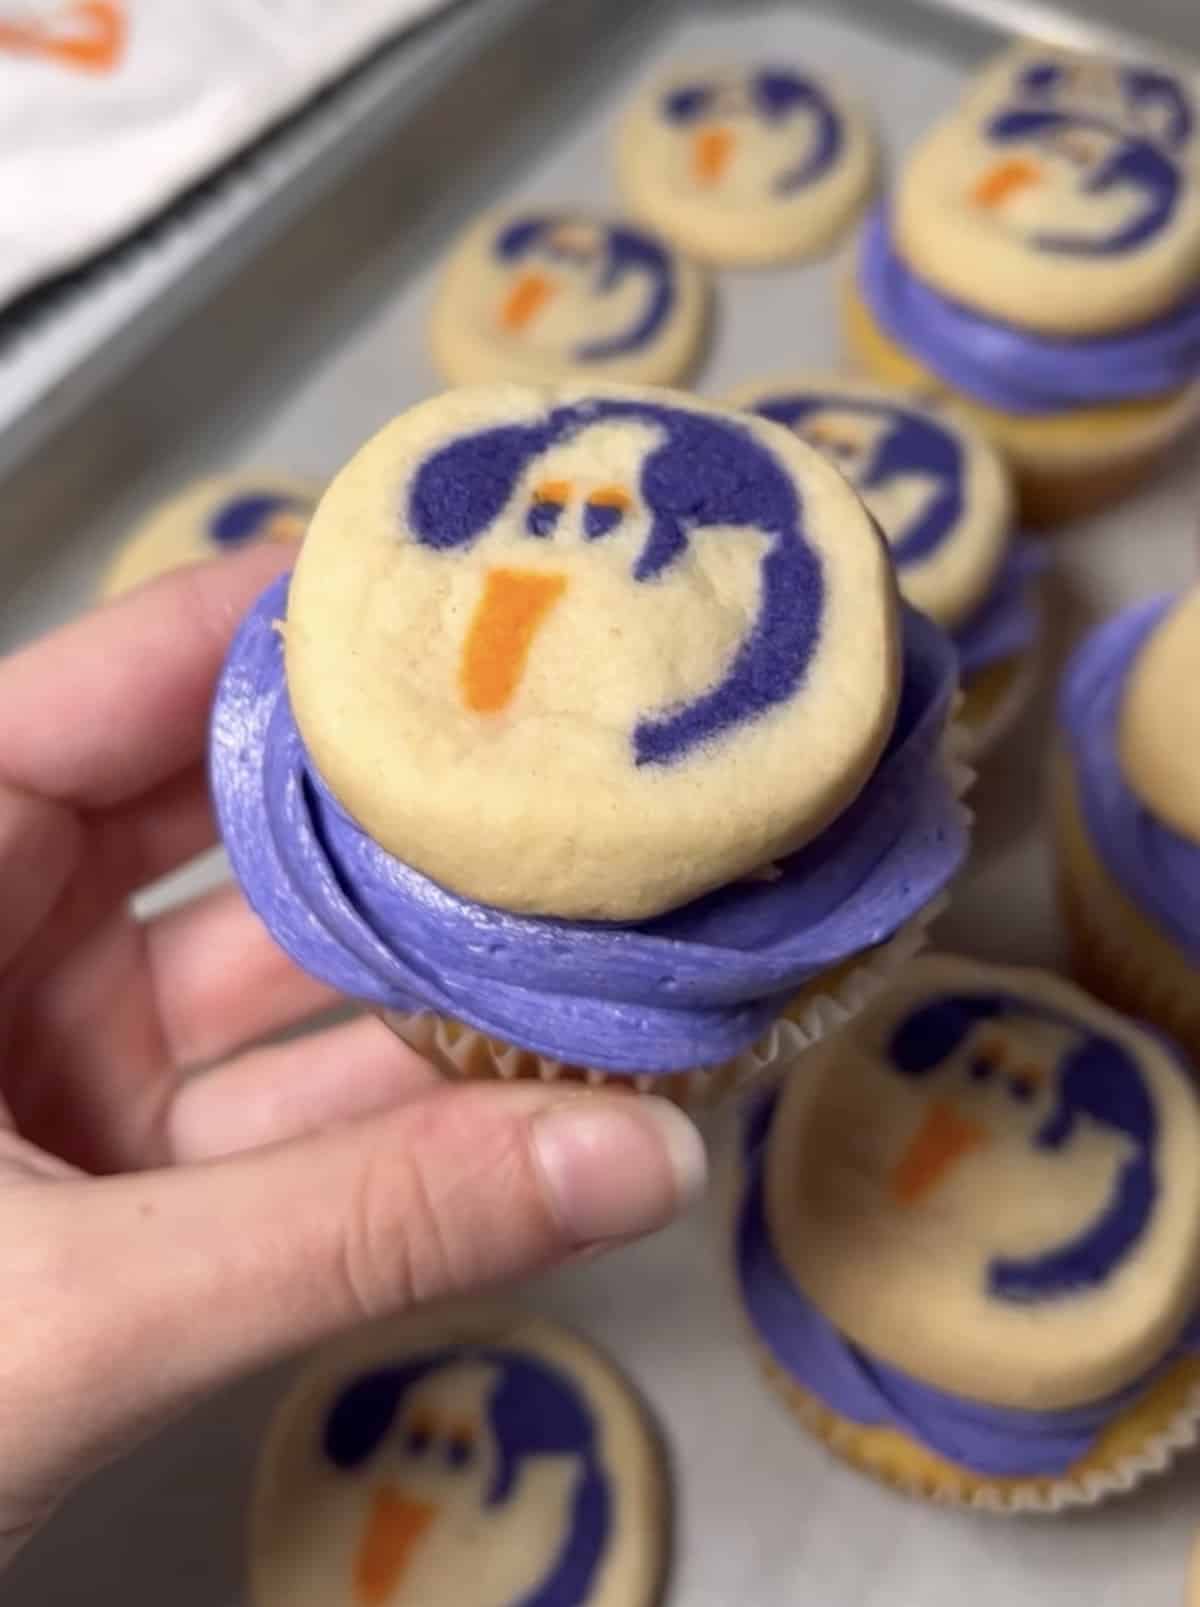 Purple cupcakes with Pillsbury Halloween cookies on top.